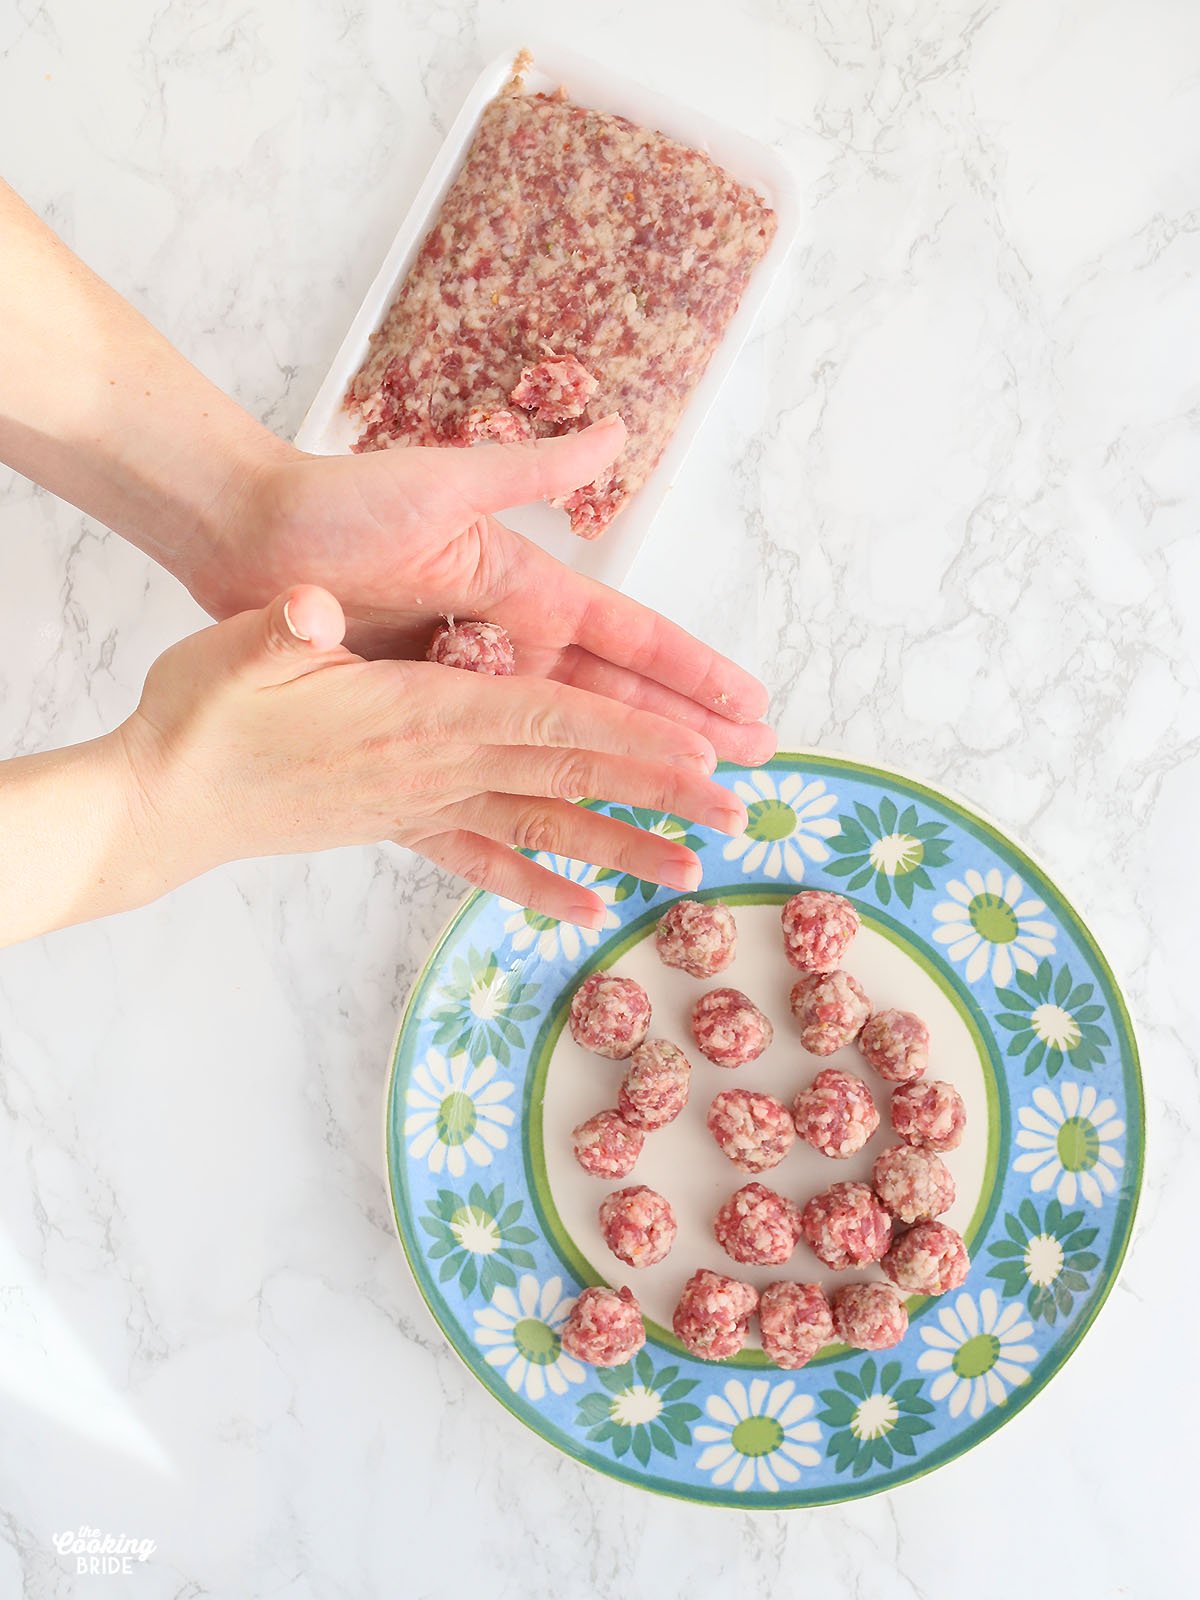 Hands rolling Italian sausage into meatballs.